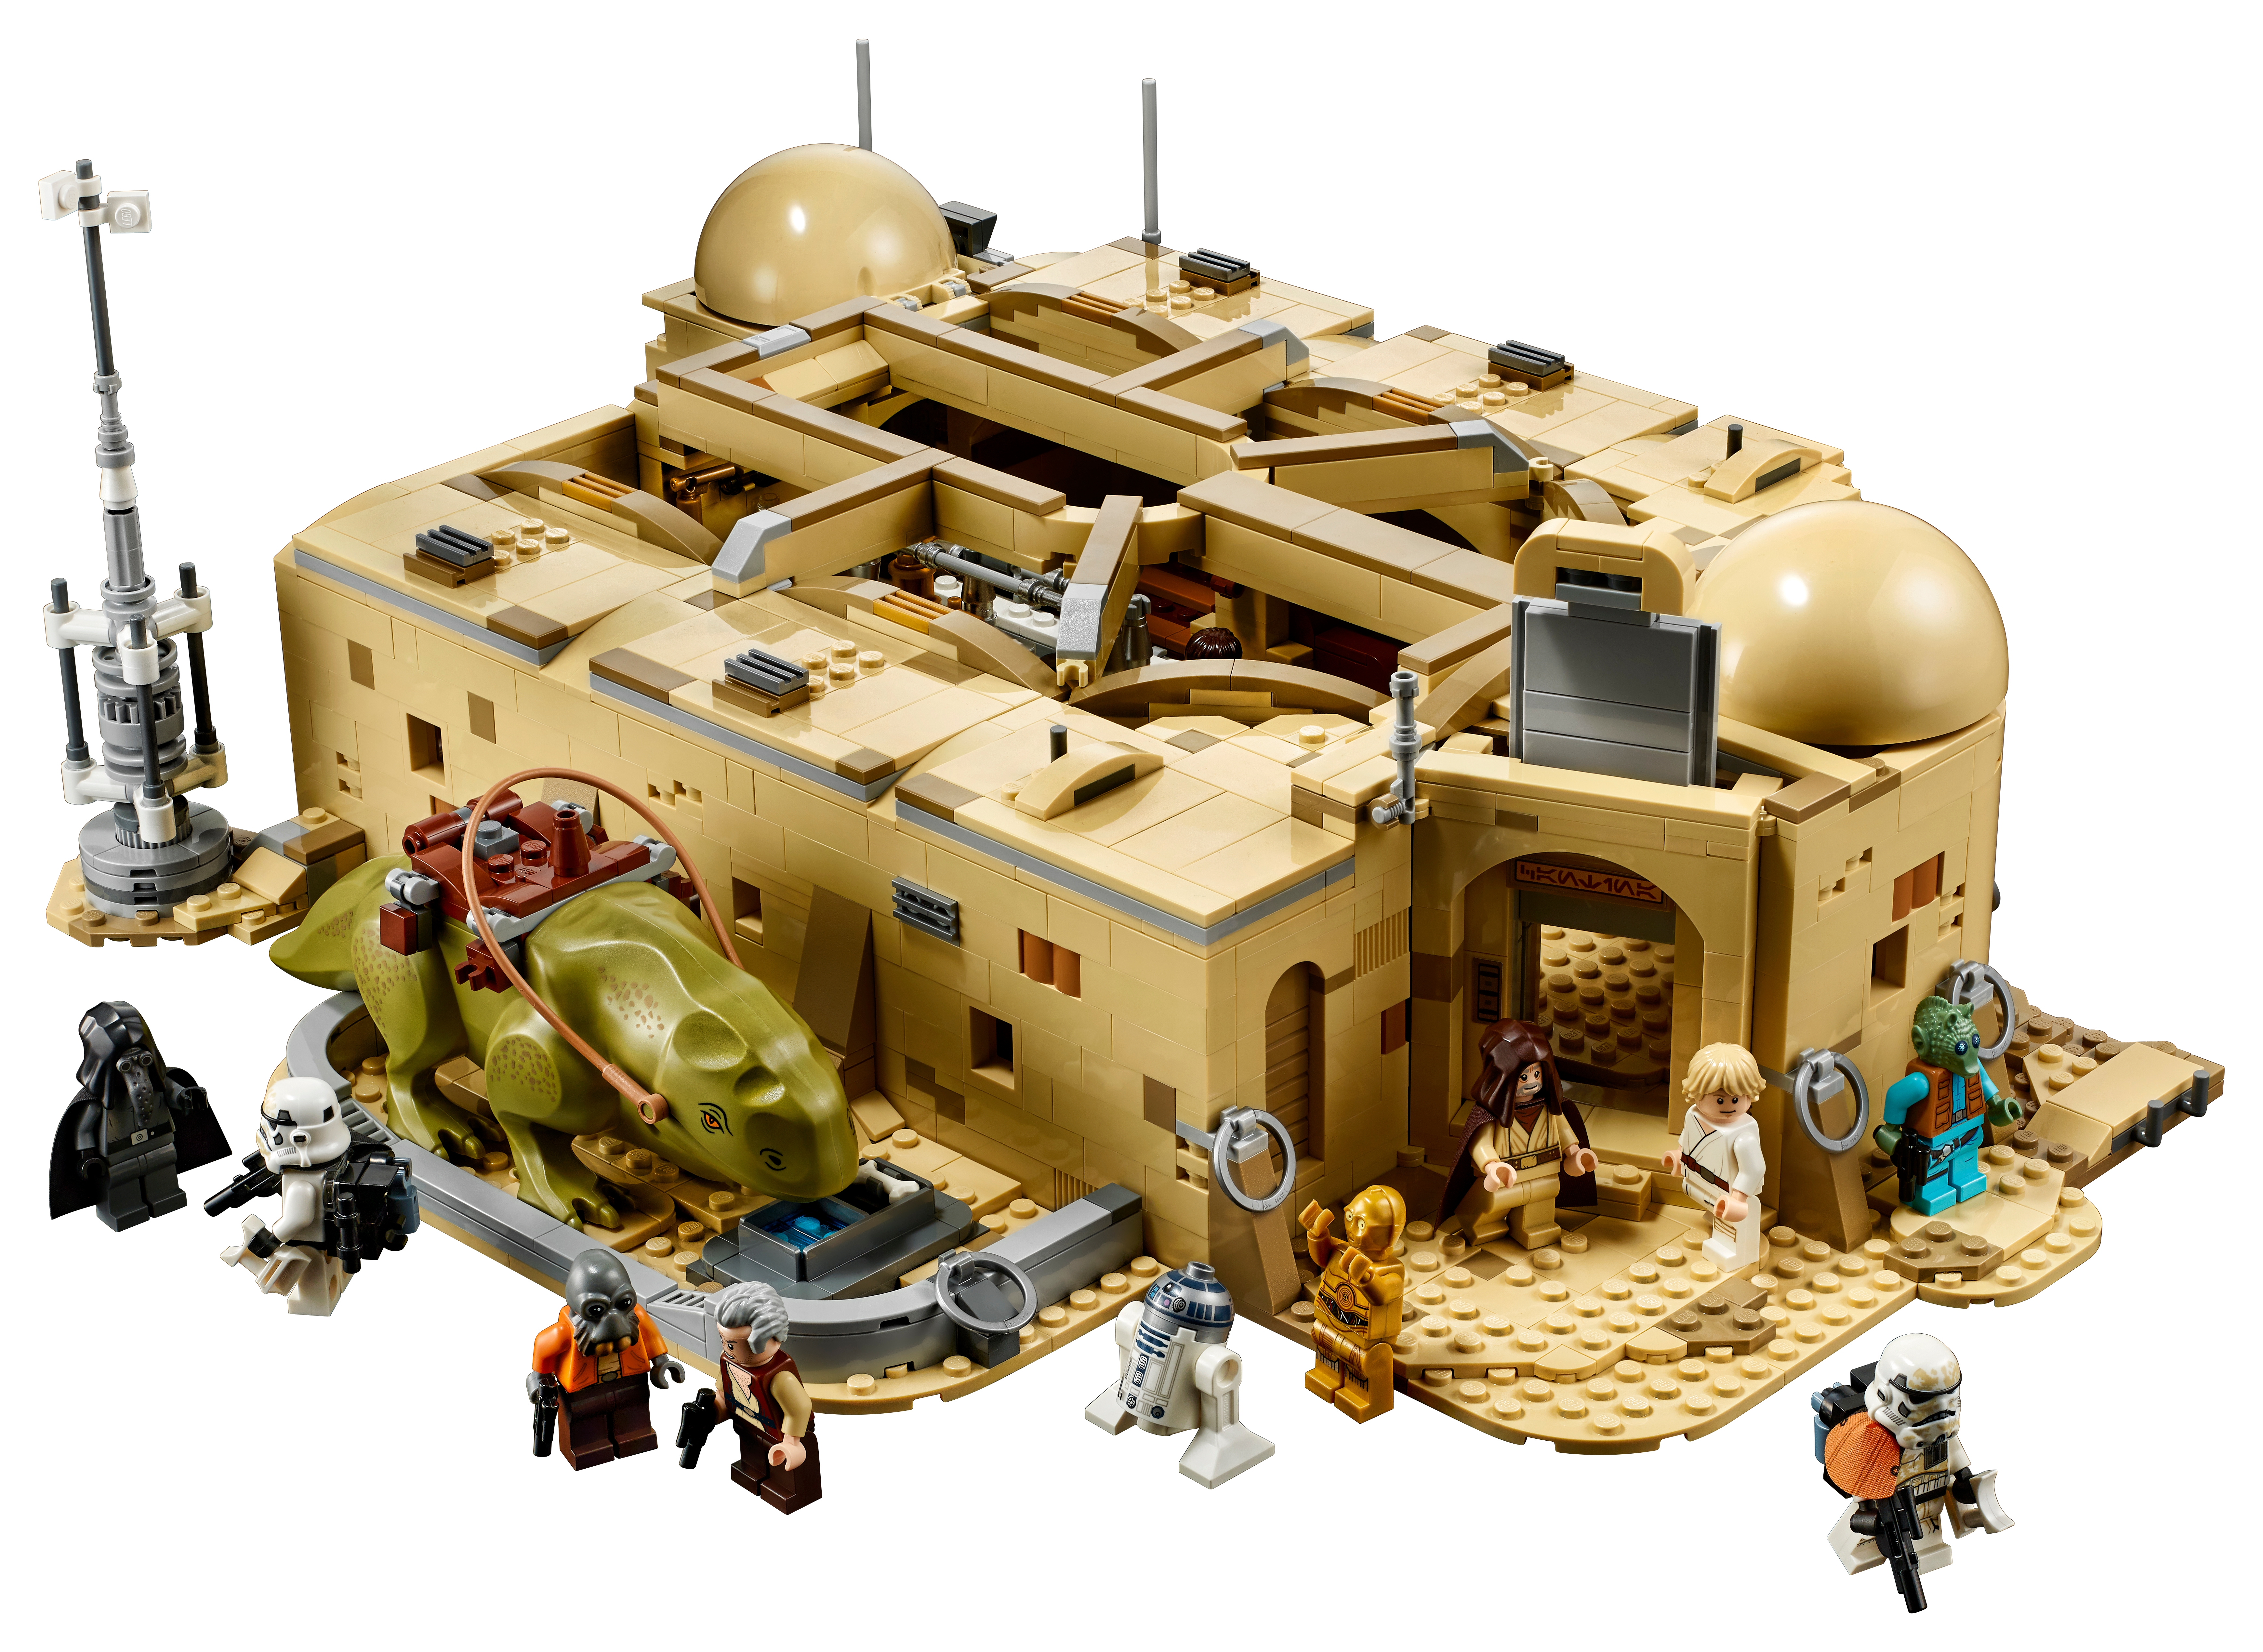 Cantina in Hand MIB ausverkauft Lego 75290 Star Wars Mos Eisley 3187 PCs! 